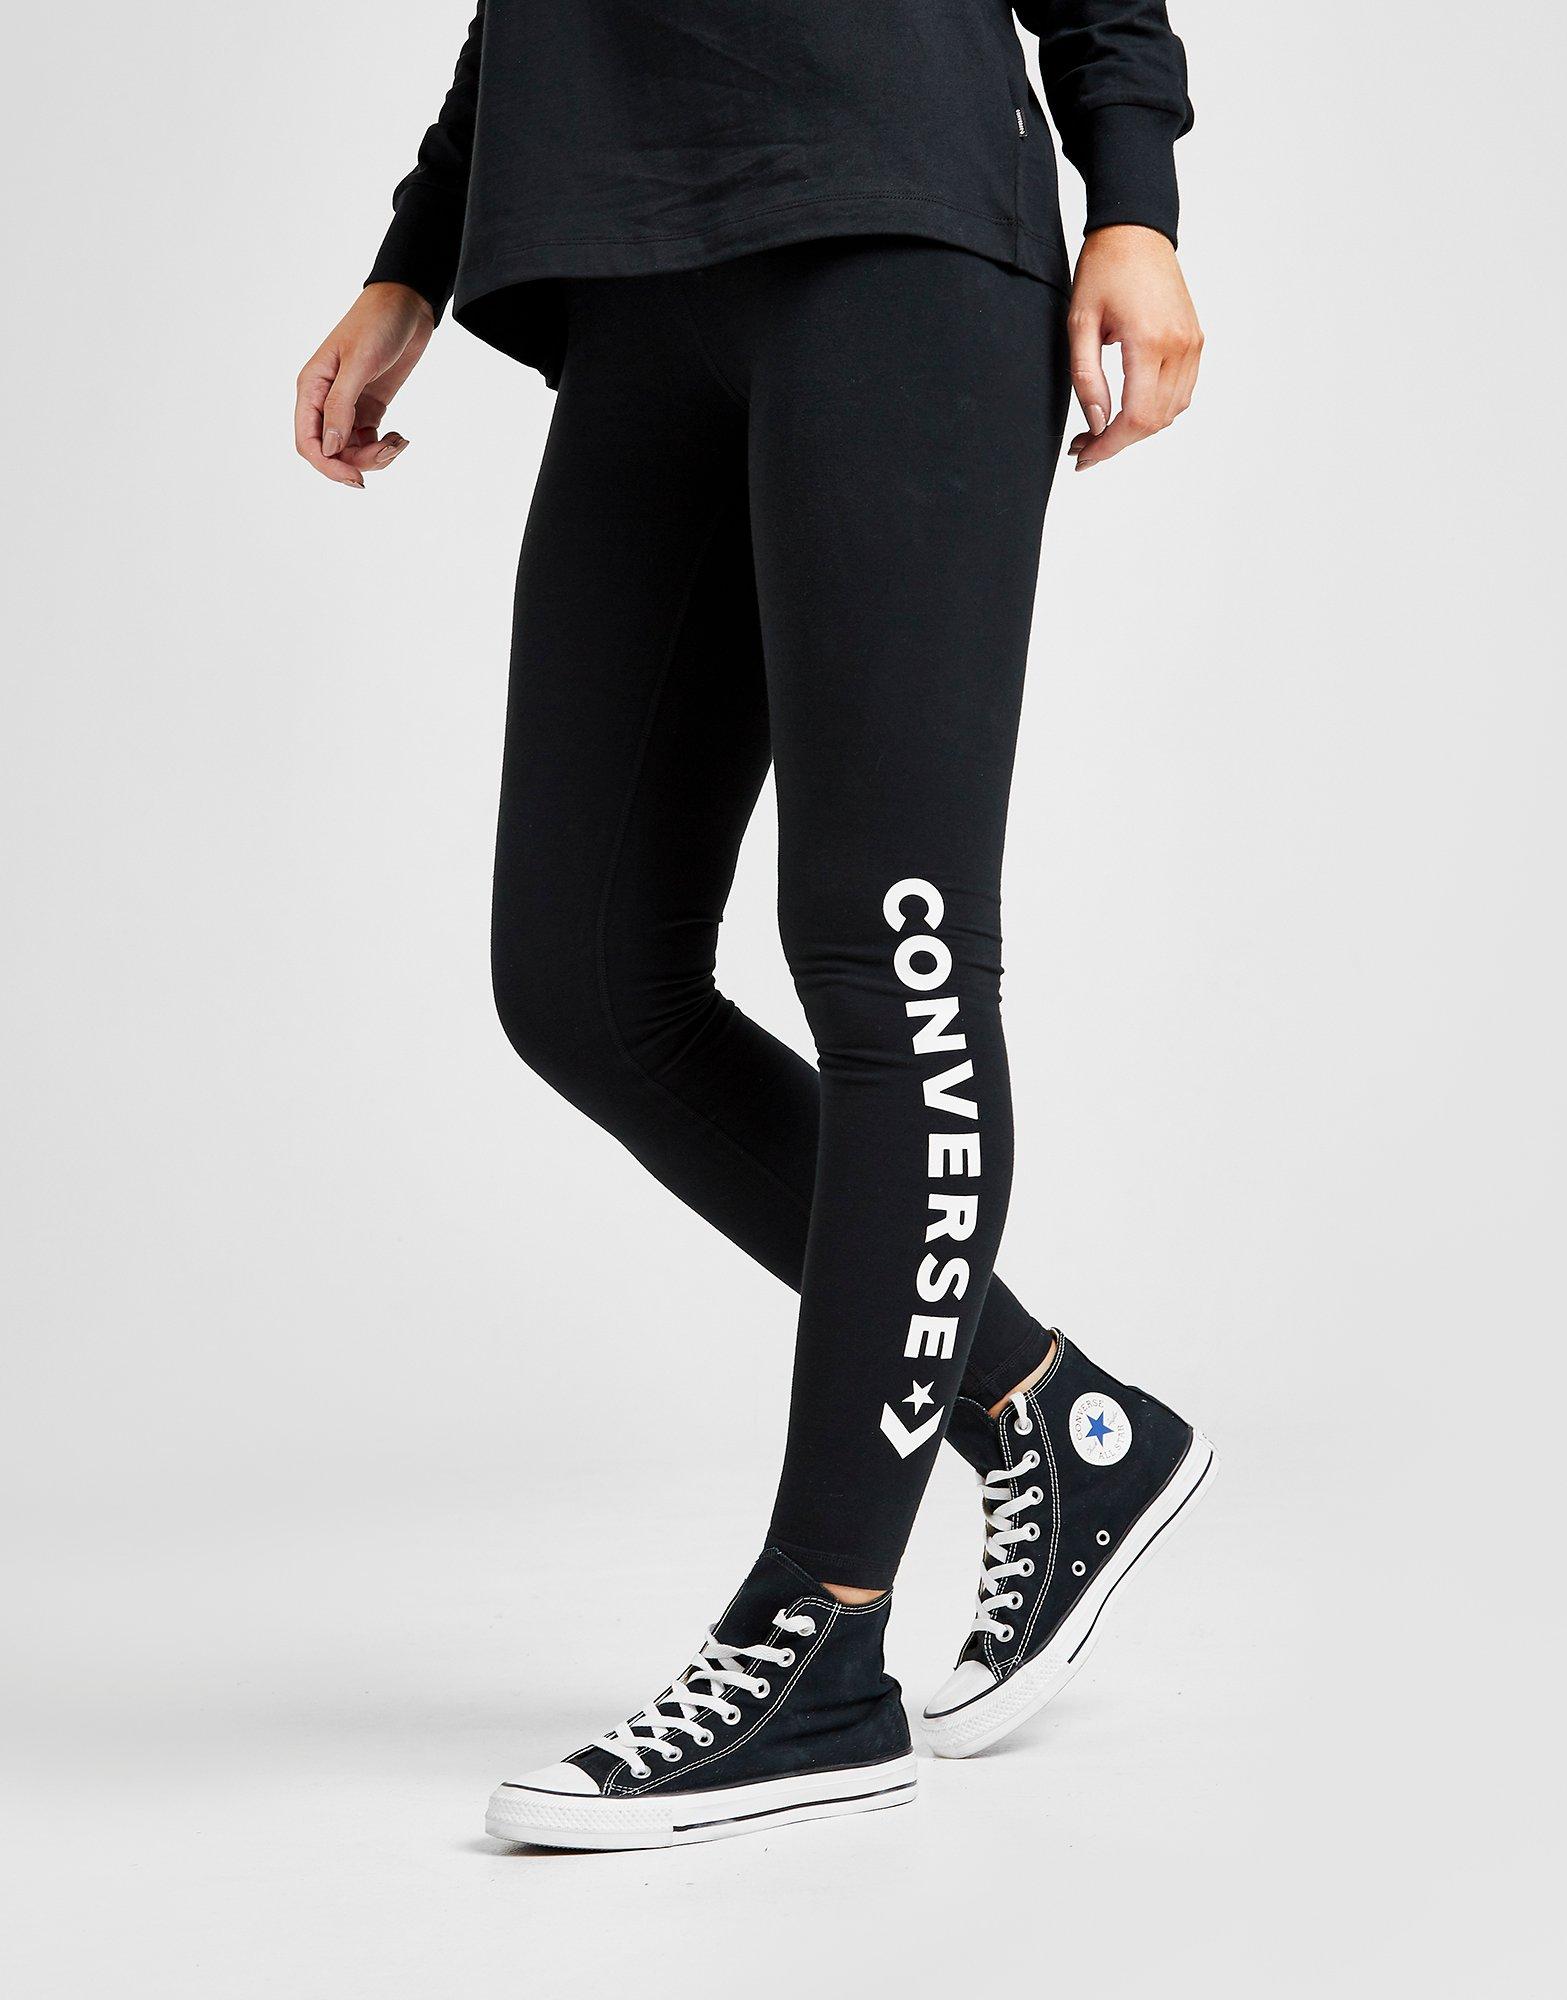 Converse Wordmark Legging In Black